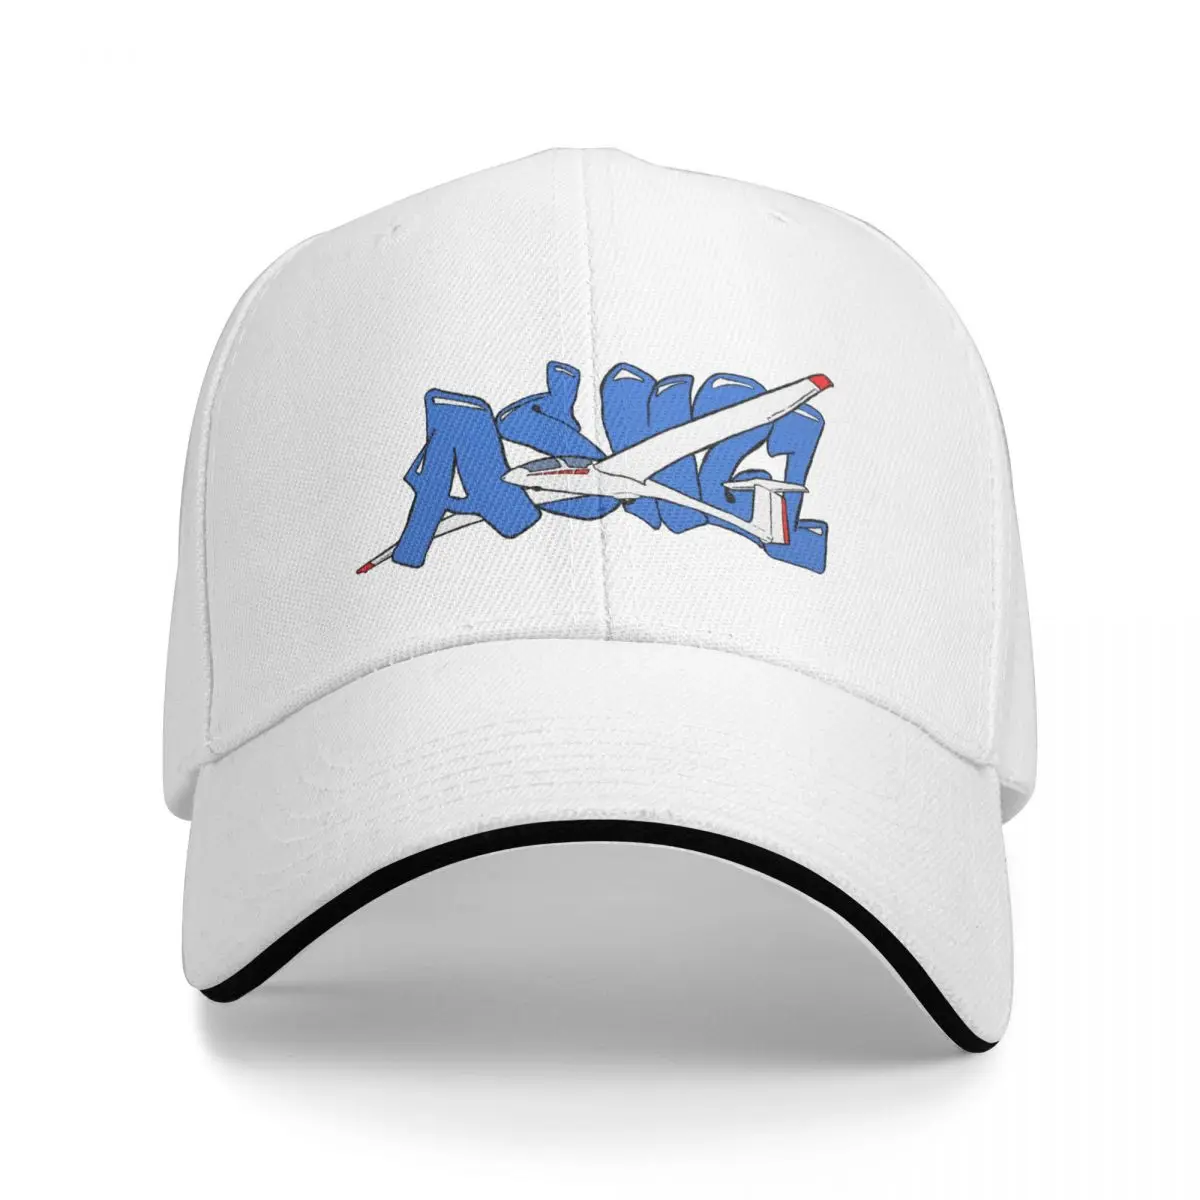 ASK21 כובע בייסבול Uv הגנה סולארית כובע החוף טיול כובע החוף הצמד חזרה כובע כובע לנשים גברים התמונה 0